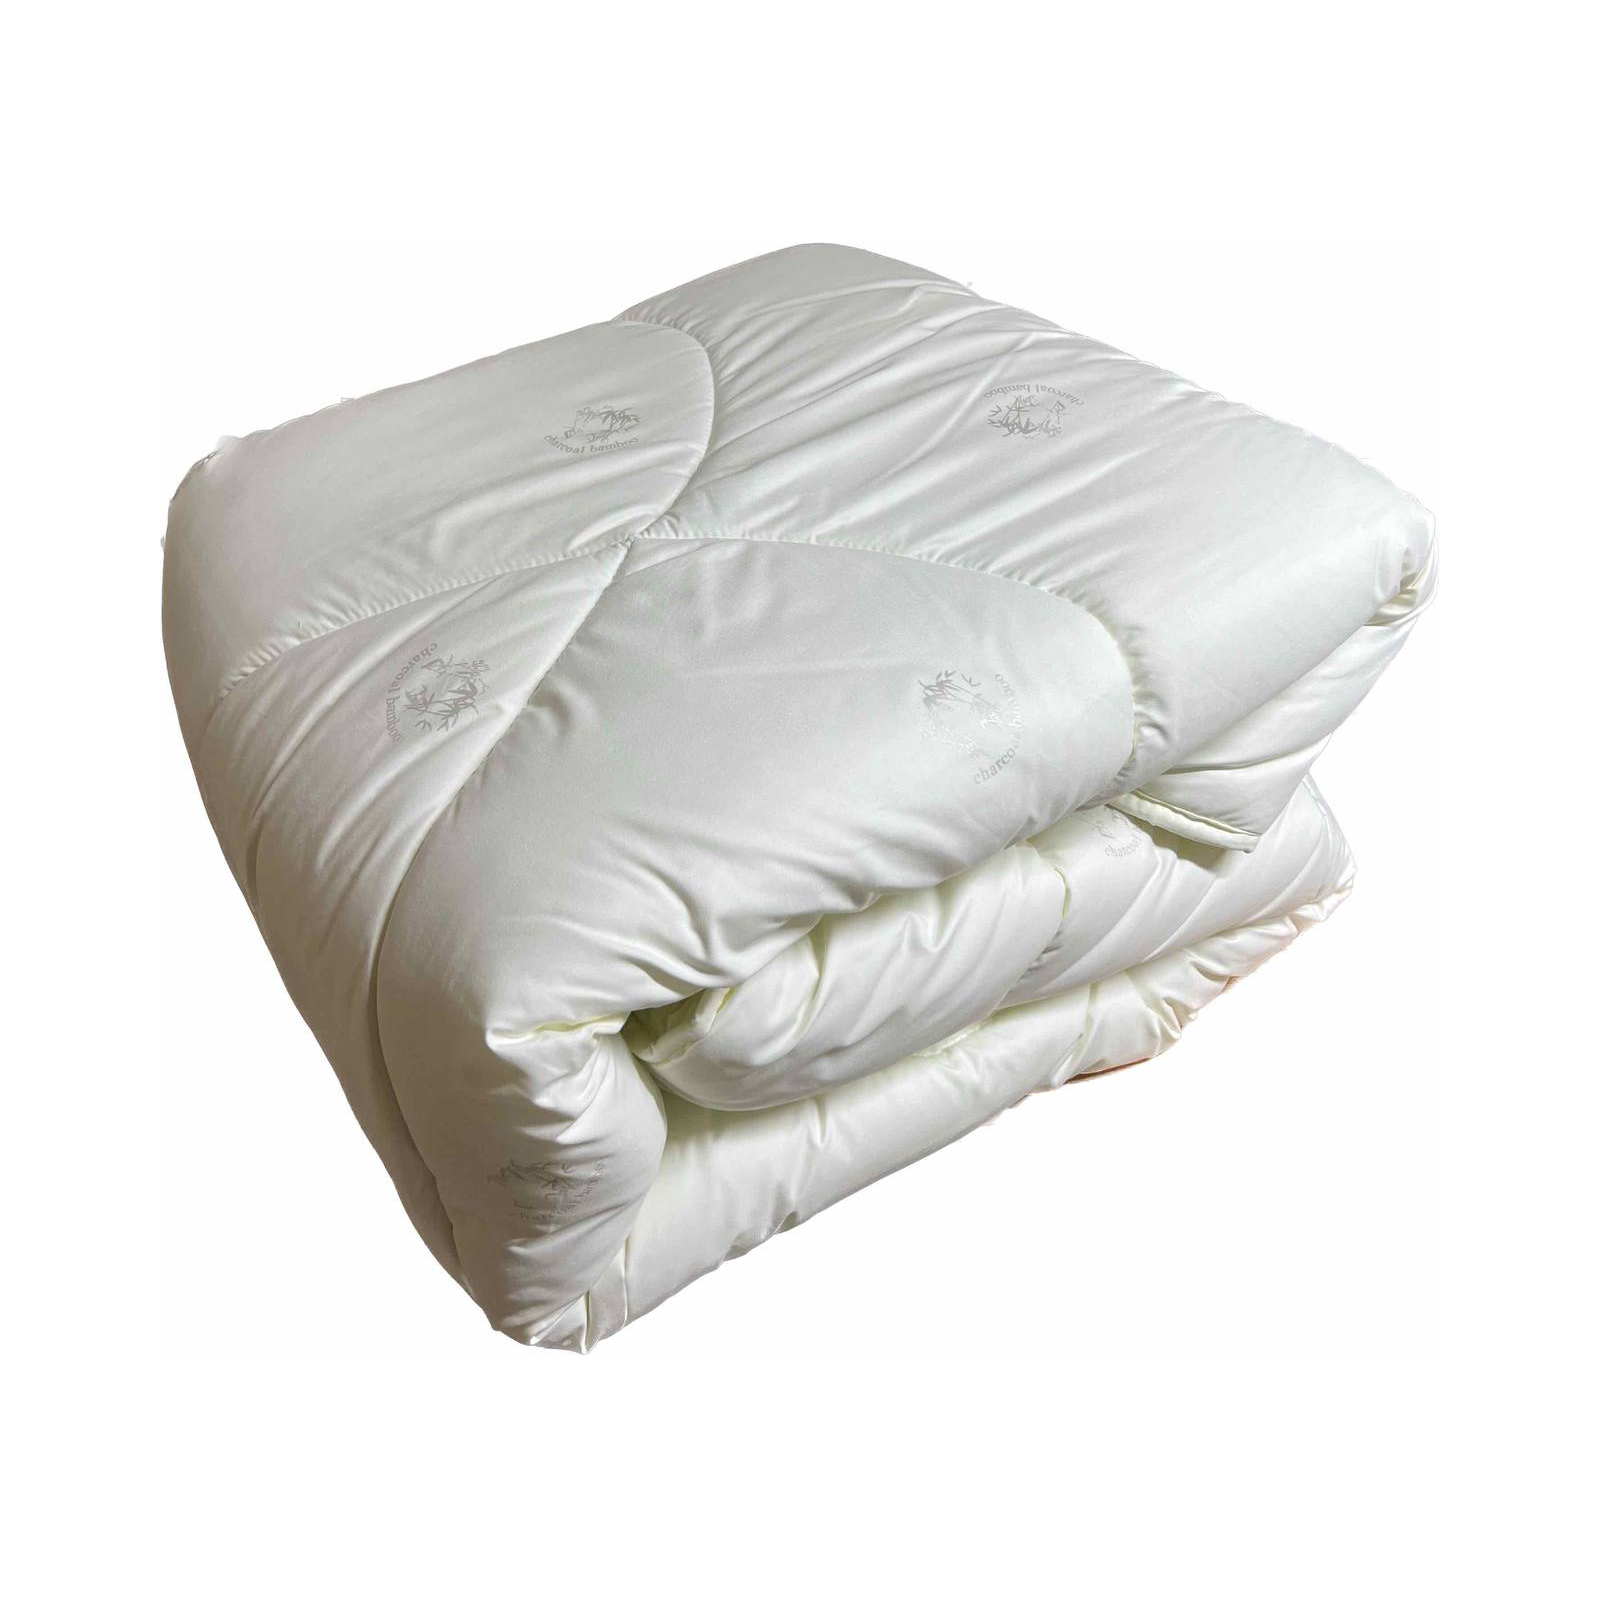 Одеяло ШЕМ зимнее бамбук Молочная односпальное 145х210 (145 Бамбук_молочний)